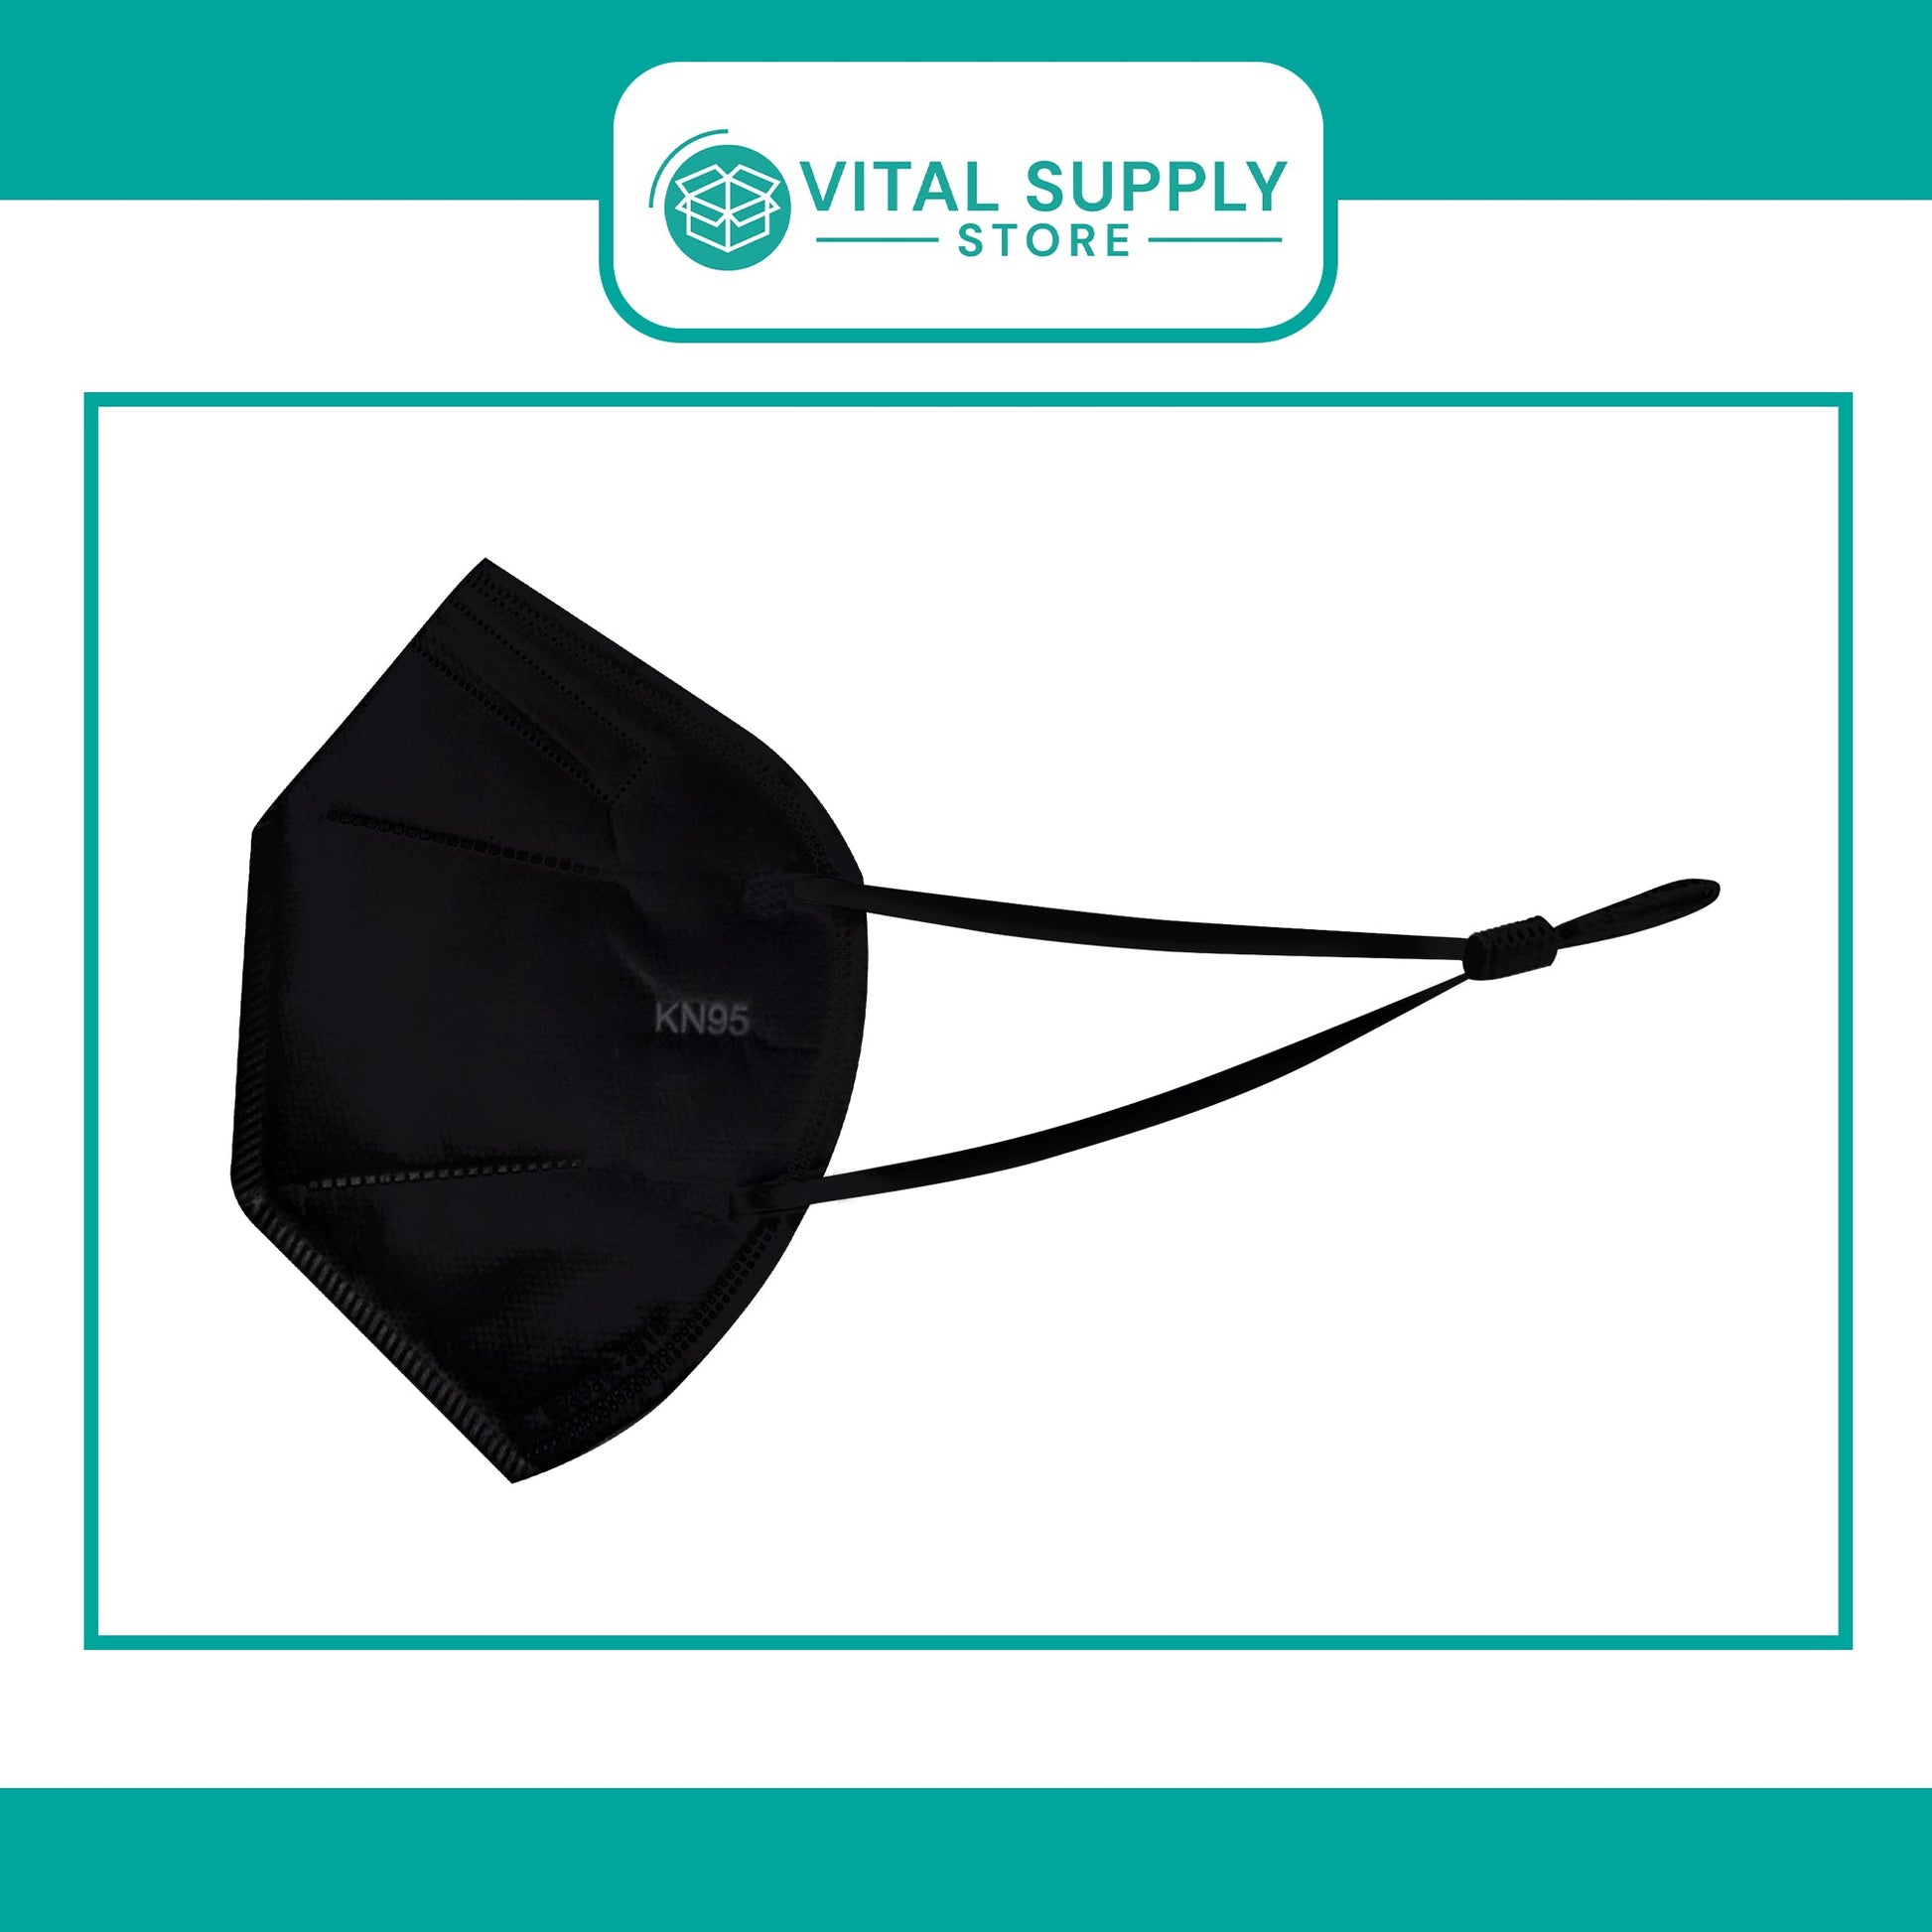 Sample Kit of KN95 Mask Sizes - Vital Supply Store - Vital Supply Store